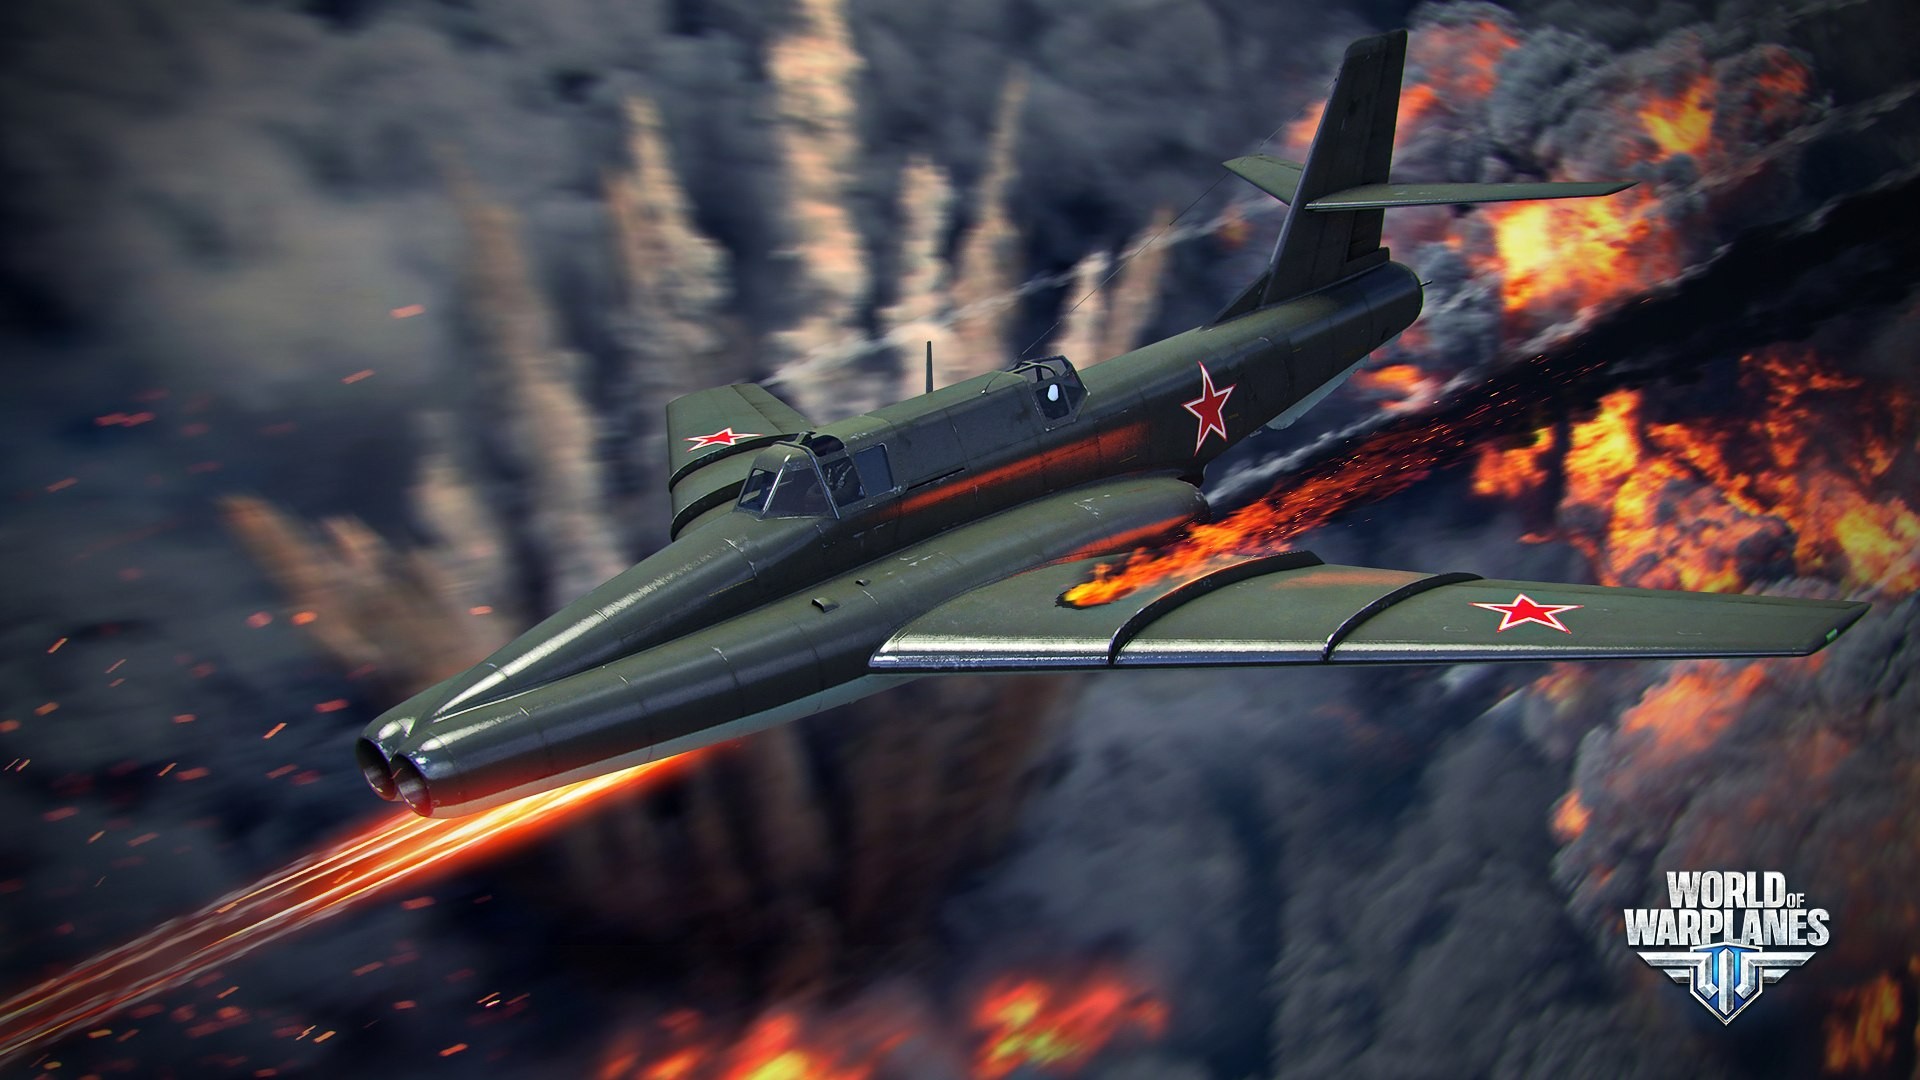 General 1920x1080 World of Warplanes airplane wargaming video games PC gaming video game art military vehicle military aircraft vehicle aircraft military